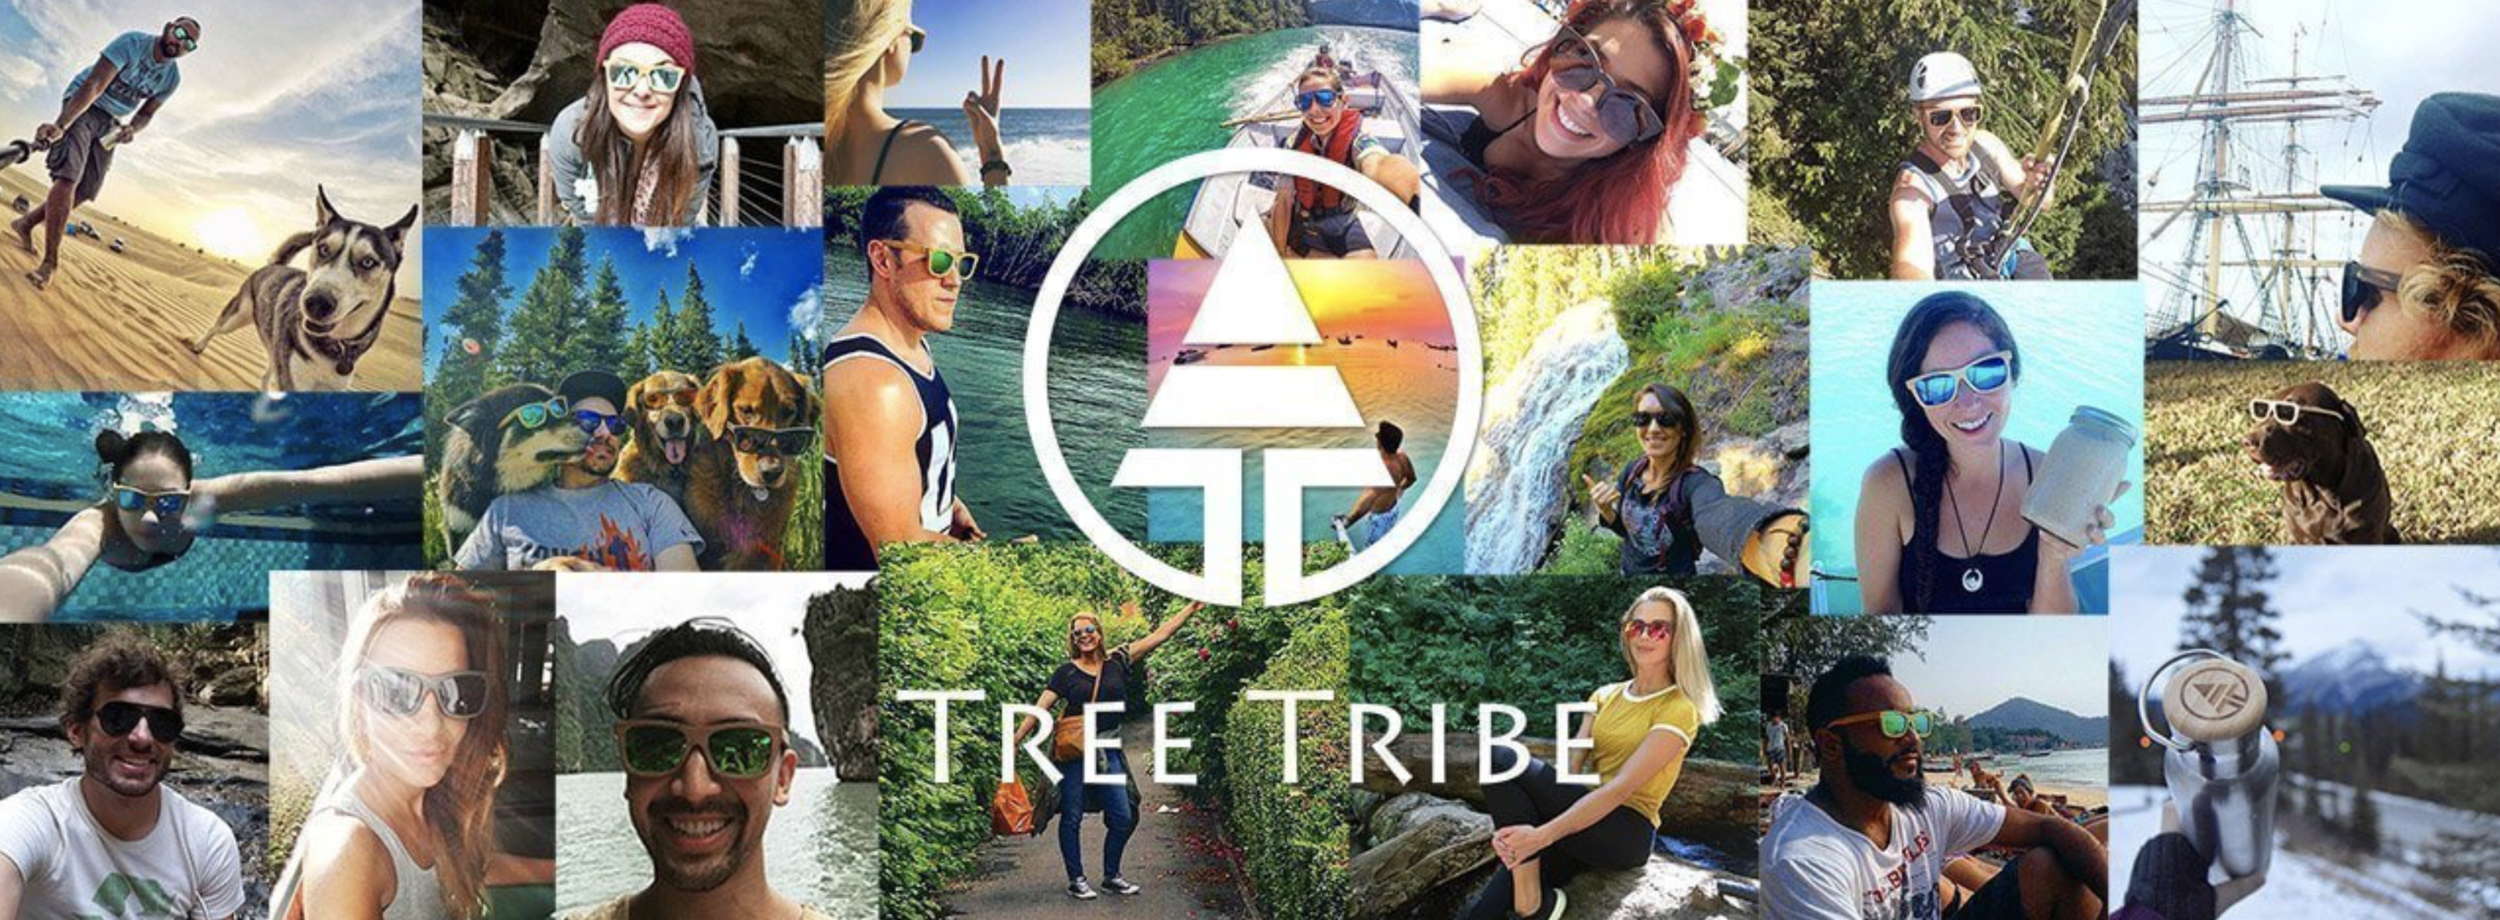 Cool Hiking Gear Tree Tribe